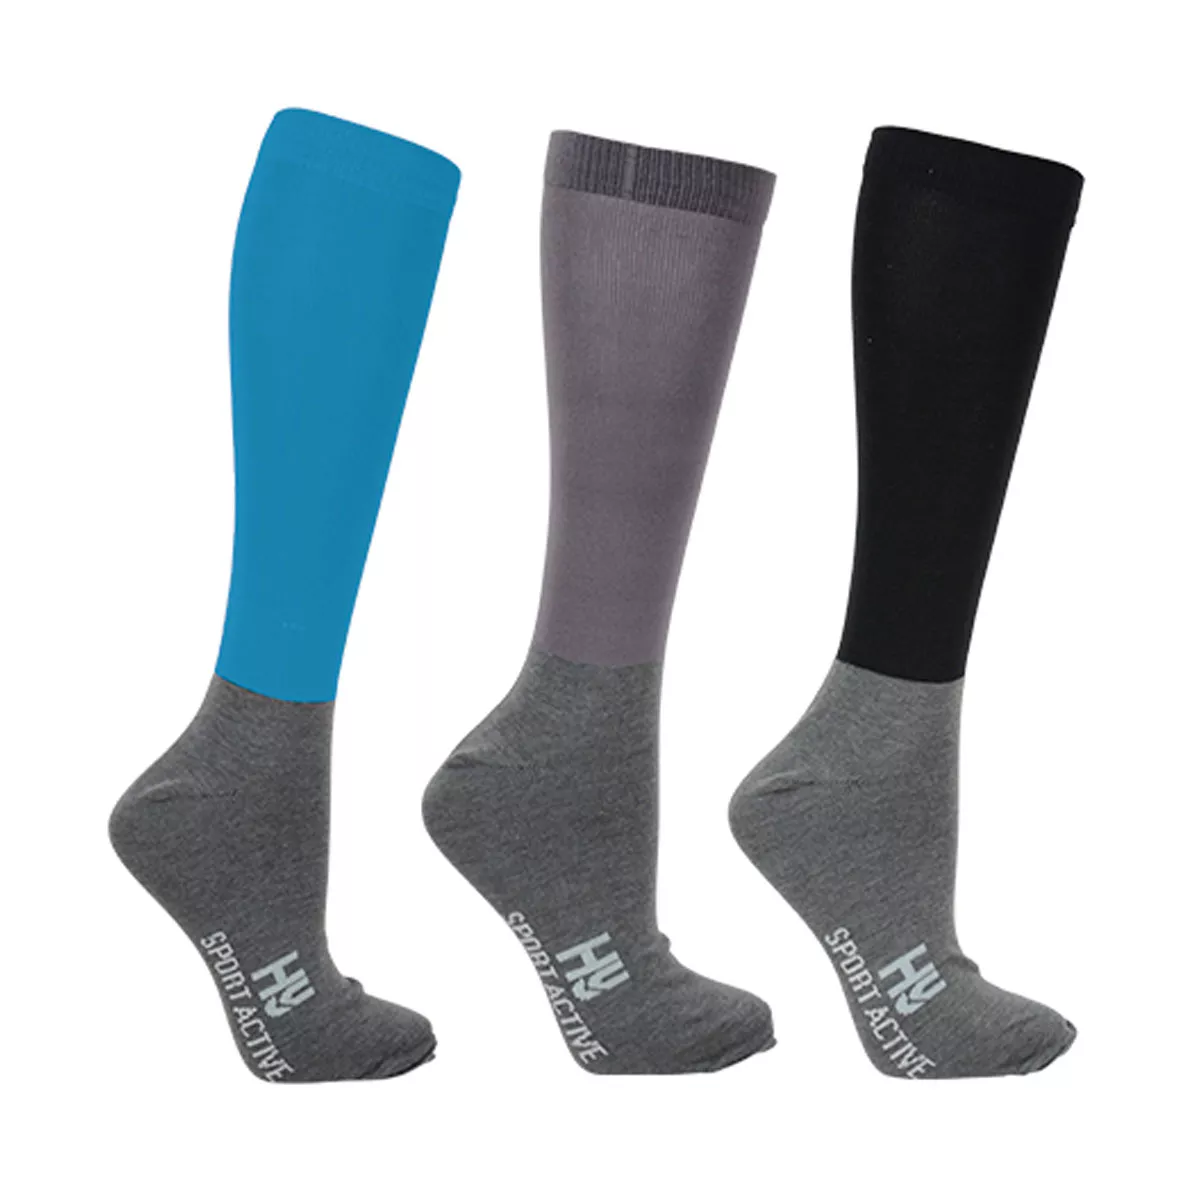 Active Riding Socks 3pk Blue/Grey/Black 4-8